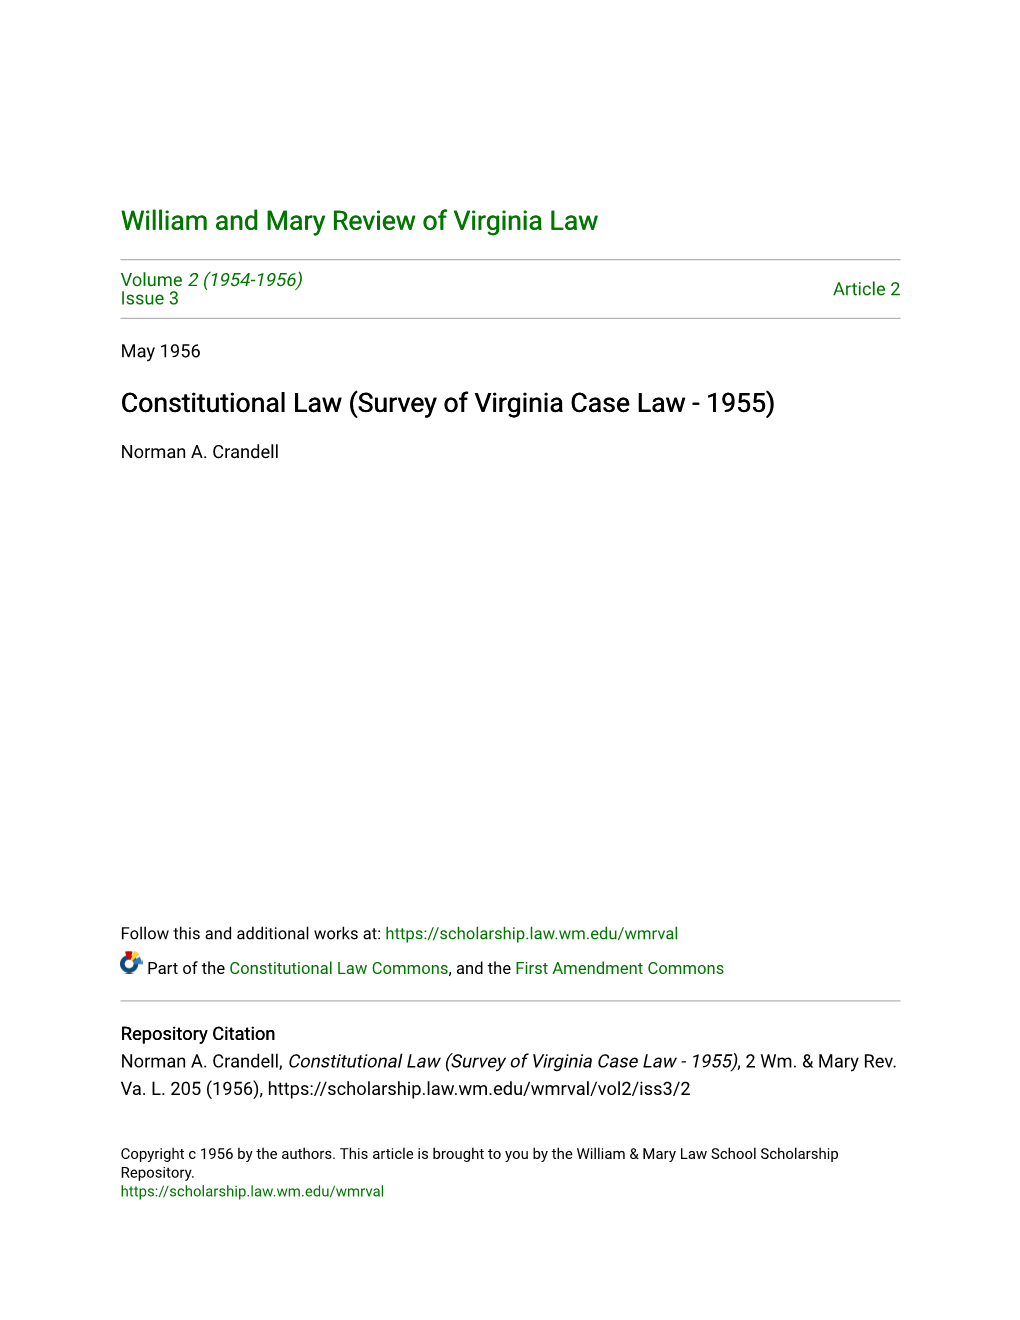 Constitutional Law (Survey of Virginia Case Law - 1955)